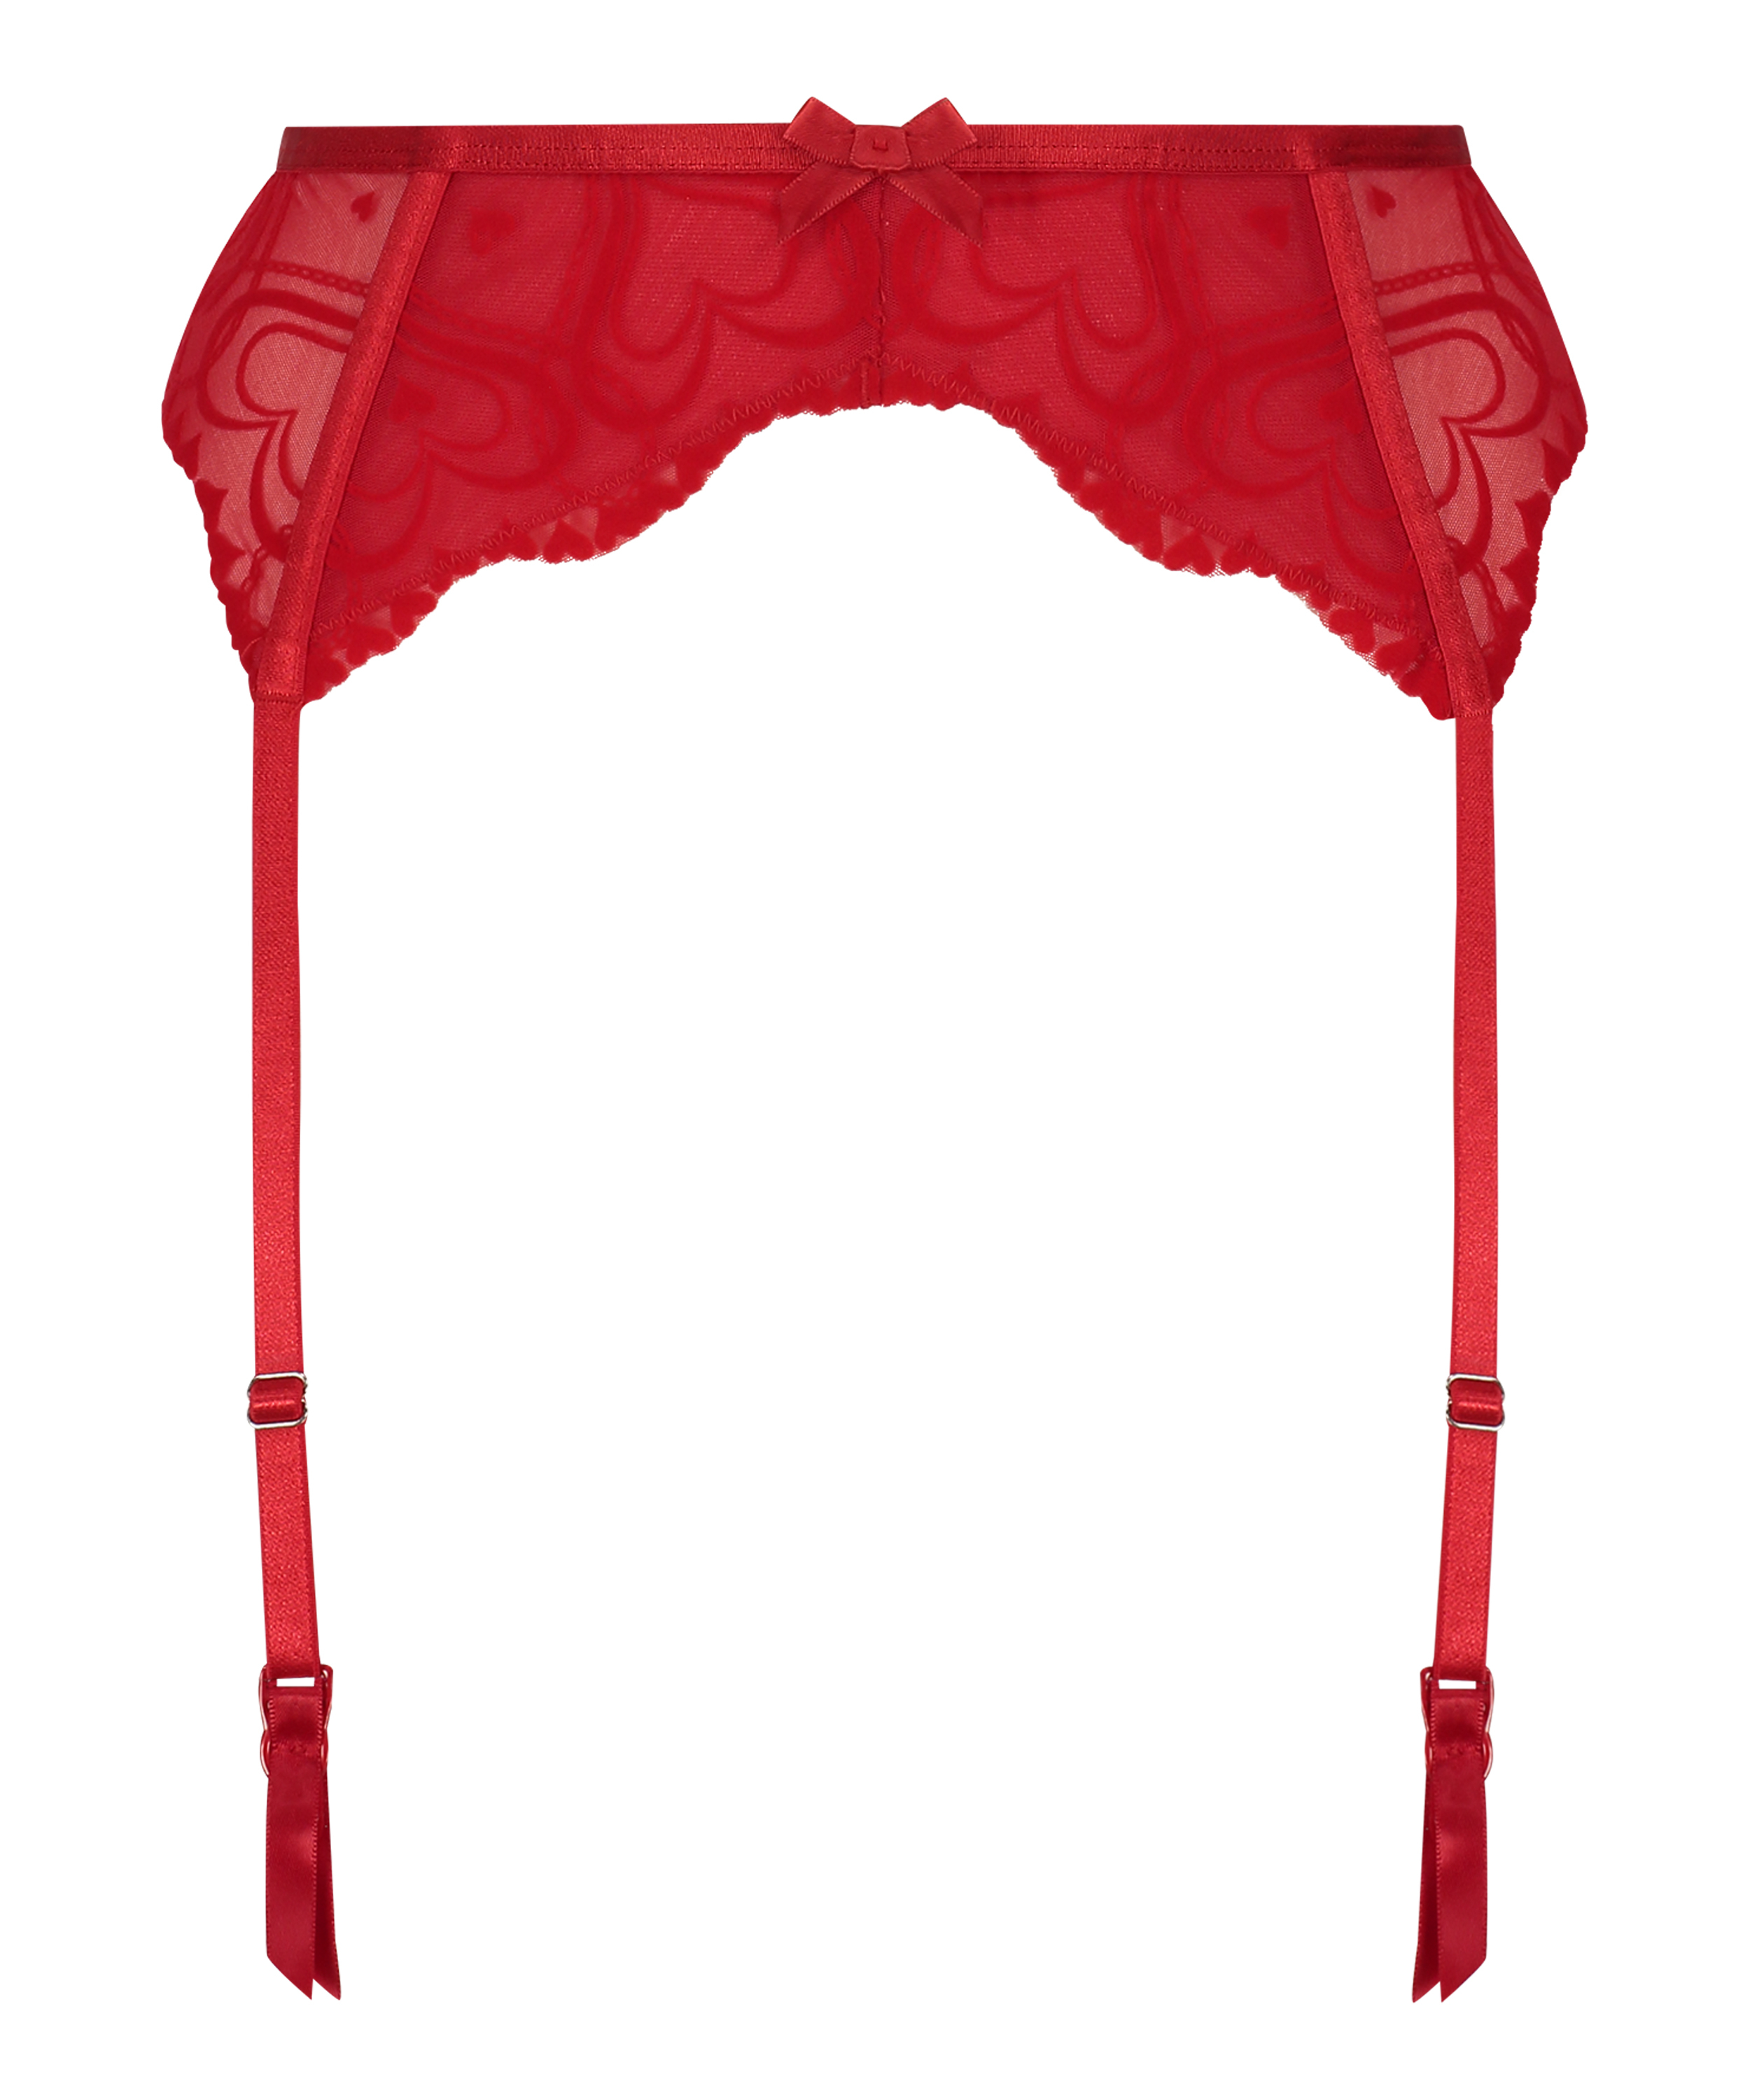 Pippa Suspenders, Red, main